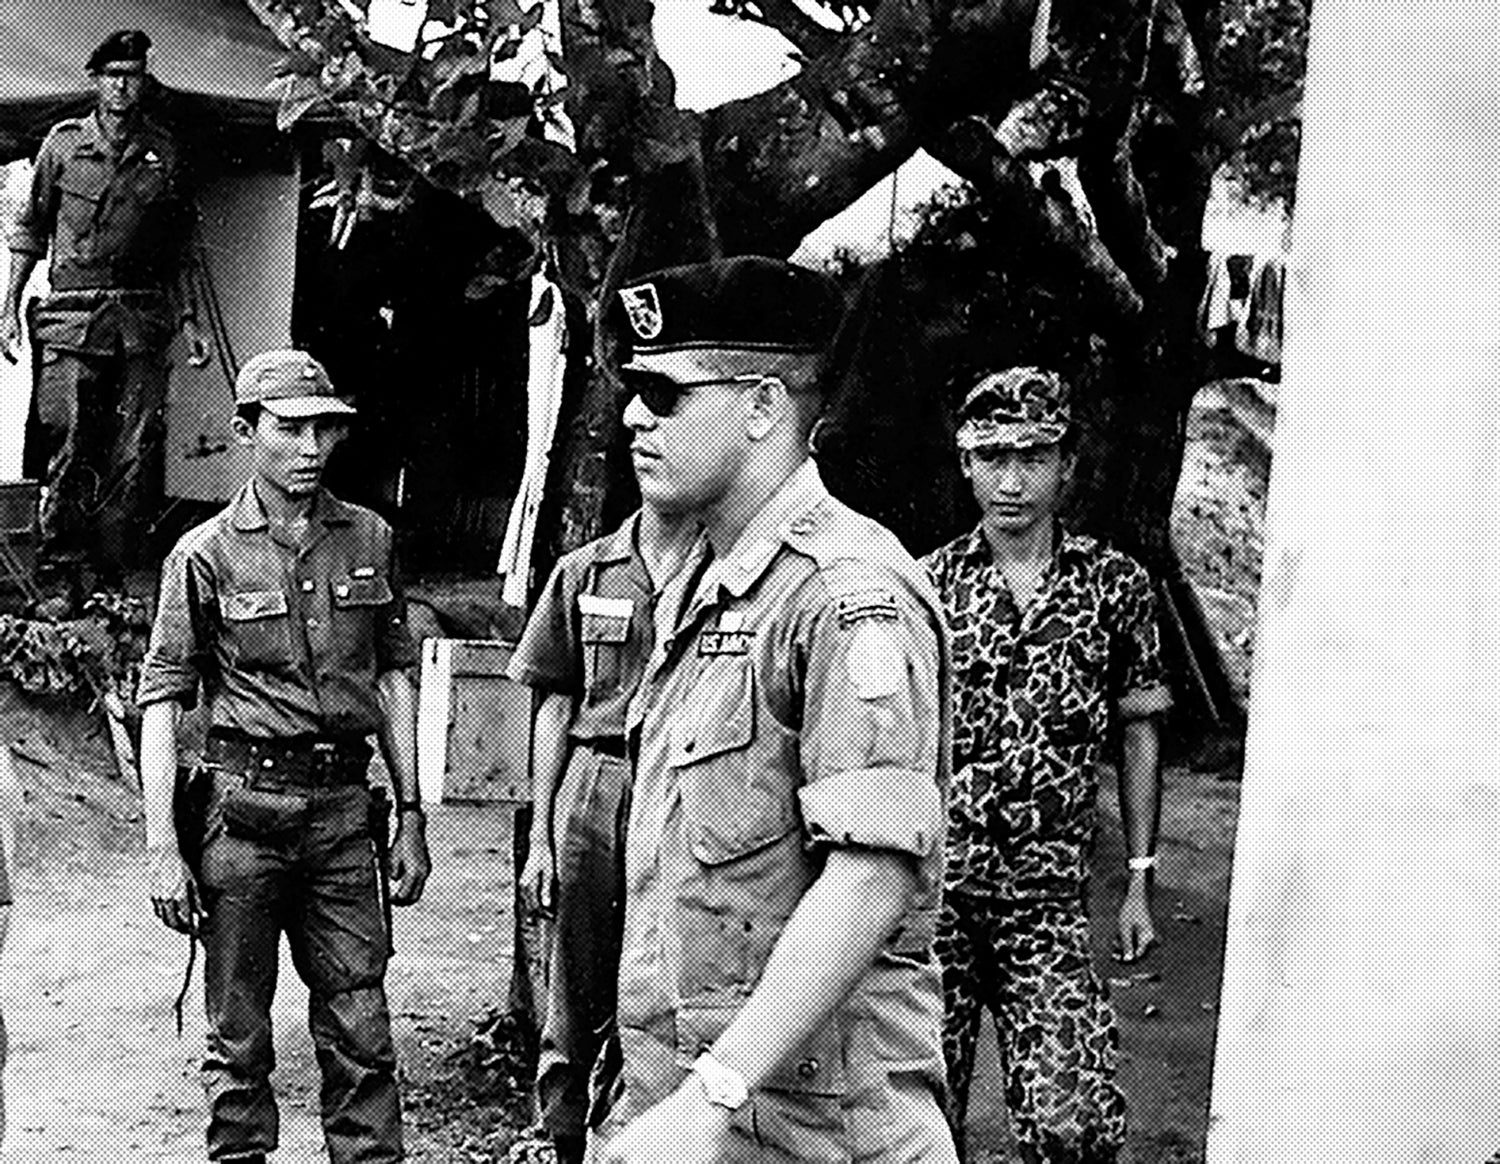 Davis in Vietnam in 1965. (Credit: Courtesy of Ron Deis)